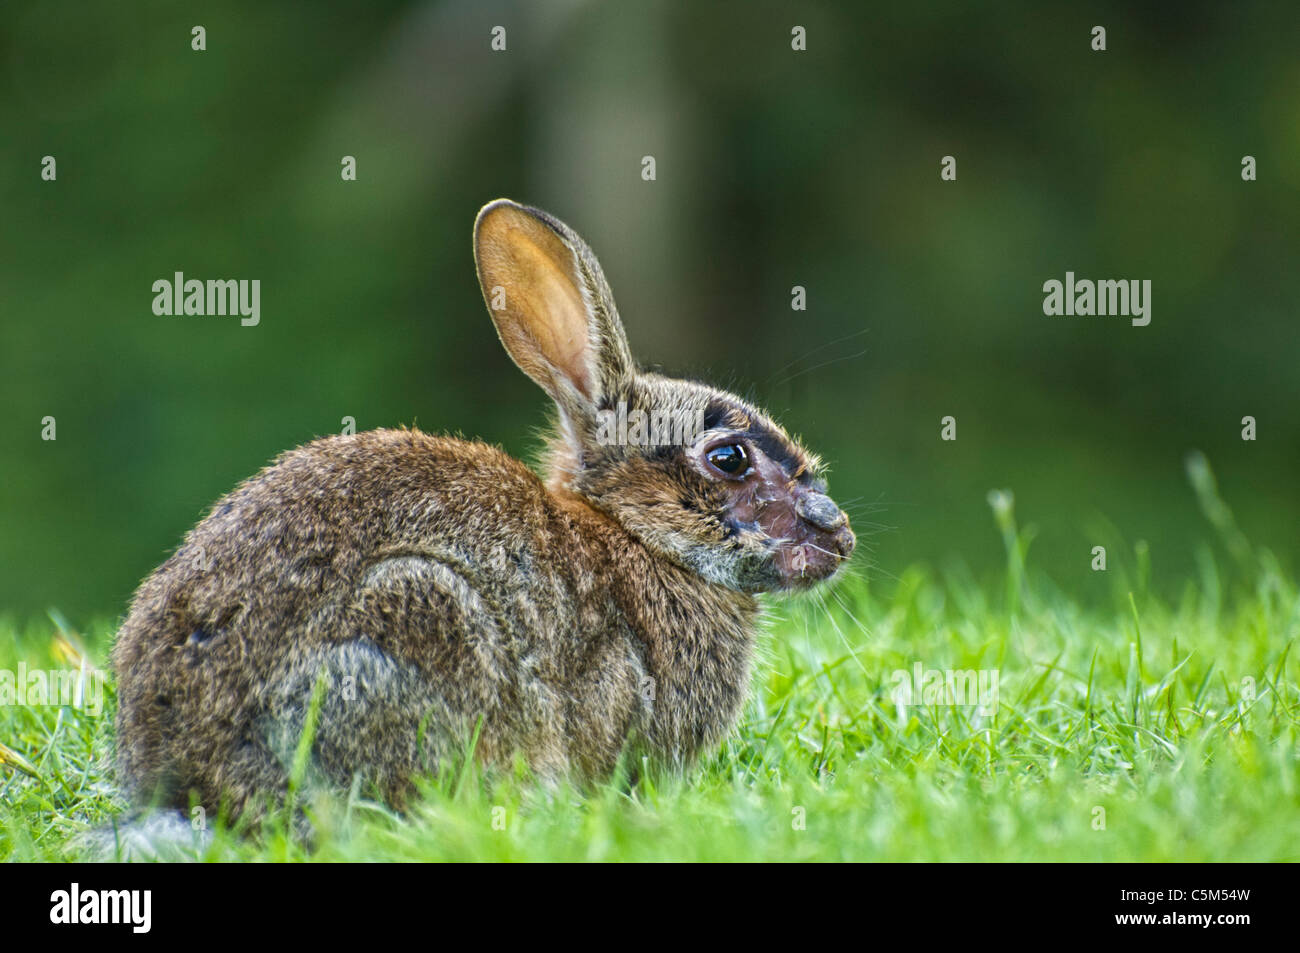 A Wild Rabbit showing symptoms of myxomatosis. Stock Photo